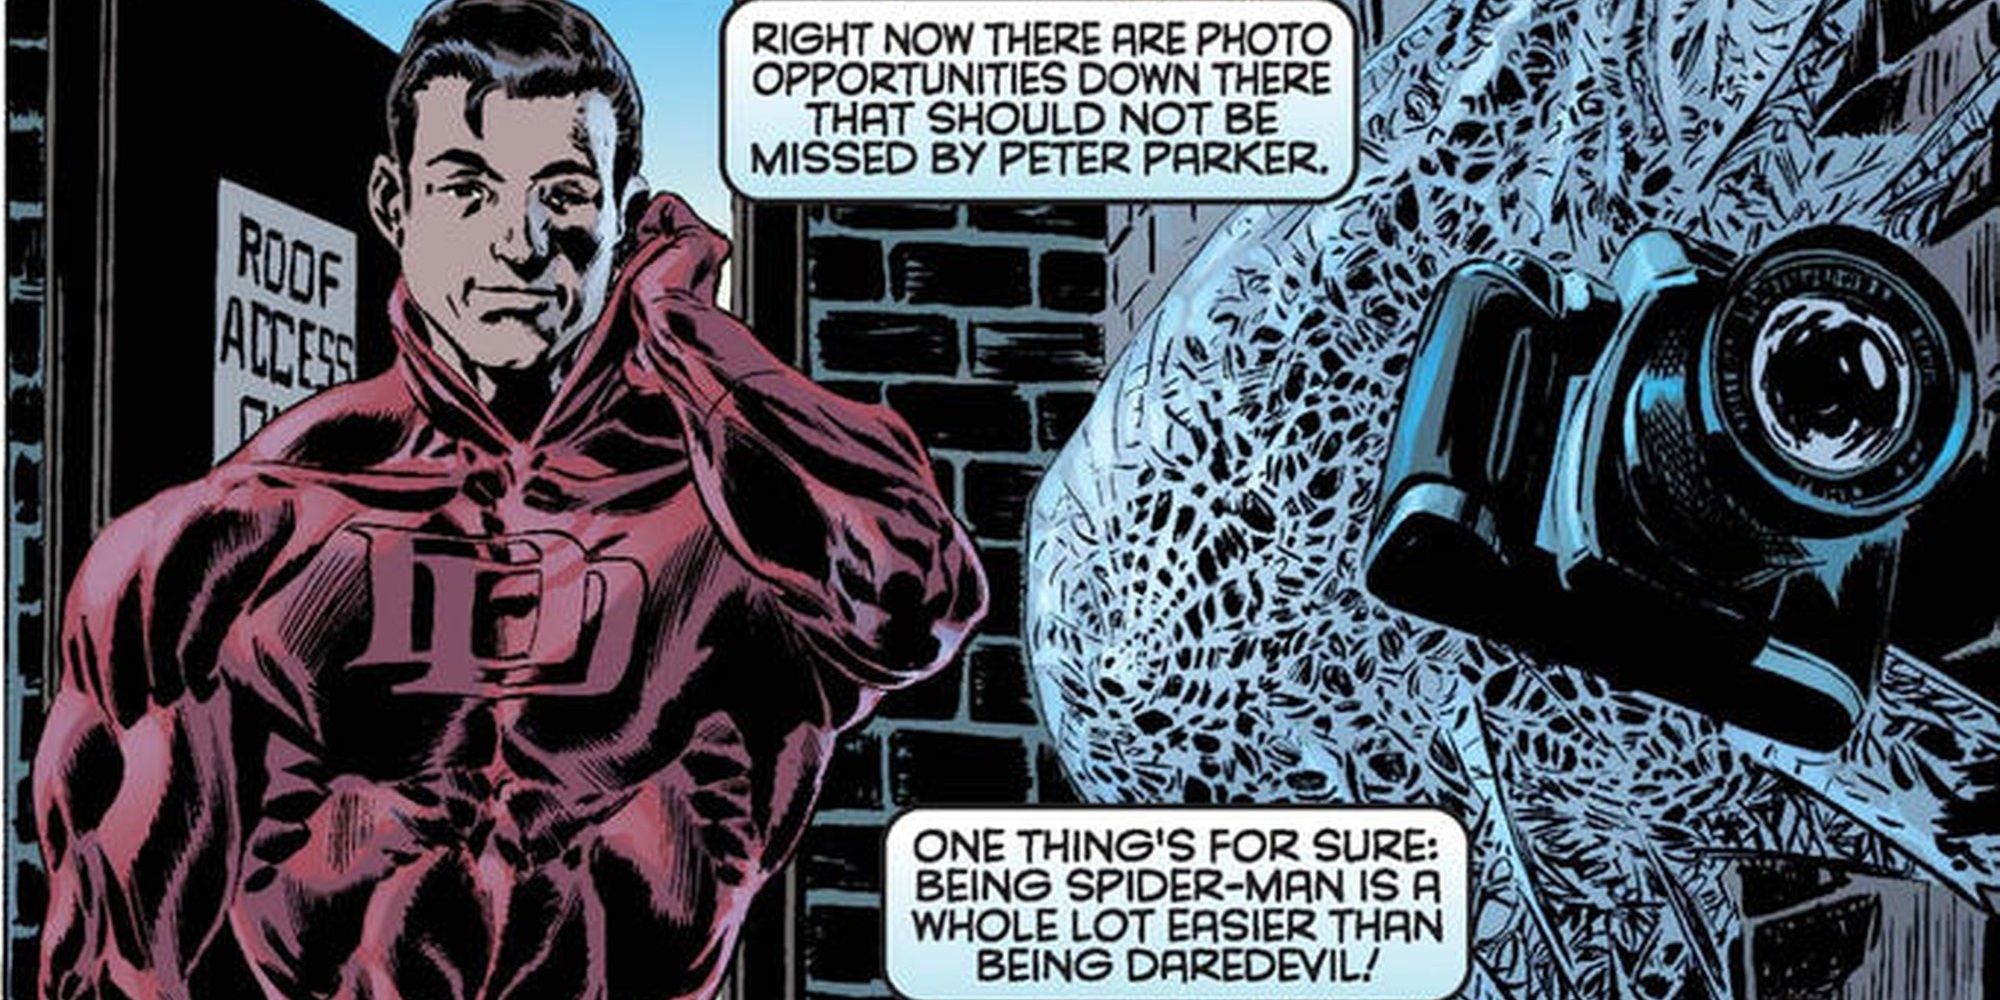 Peter Parker wears Daredevil's costume